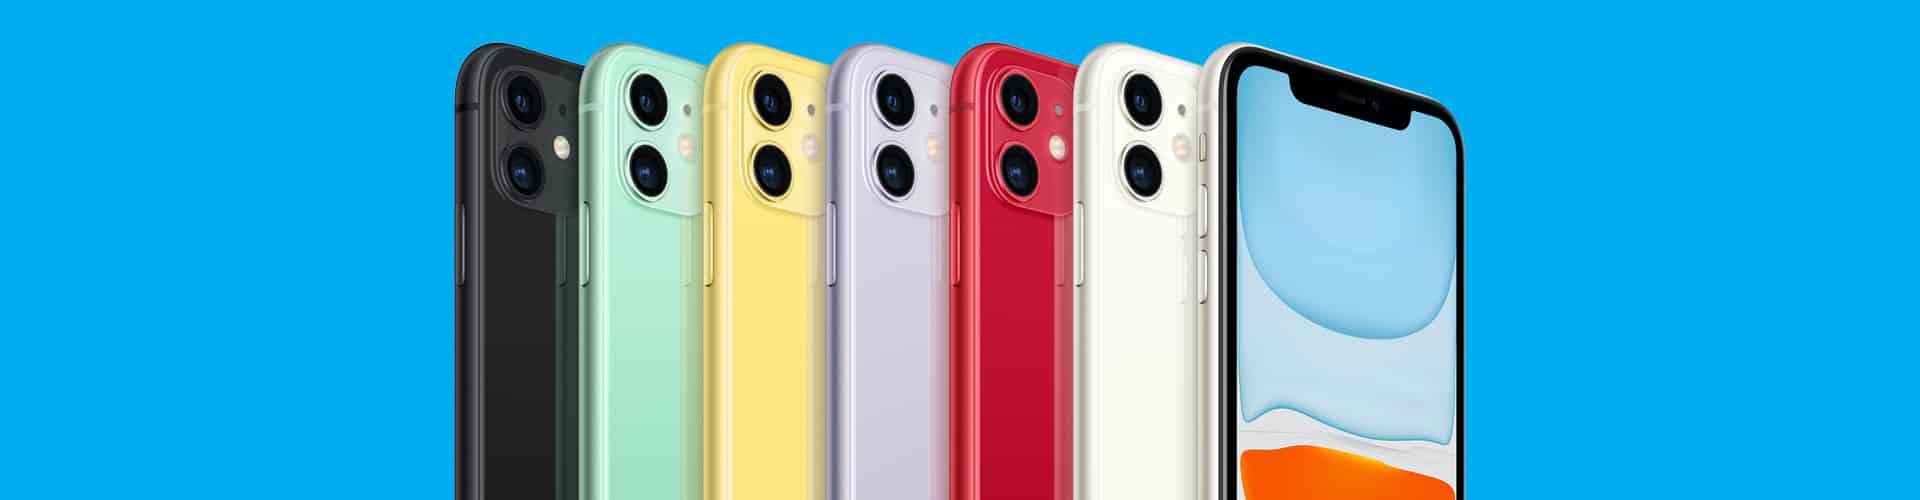 iphone 11 review camera kleuren